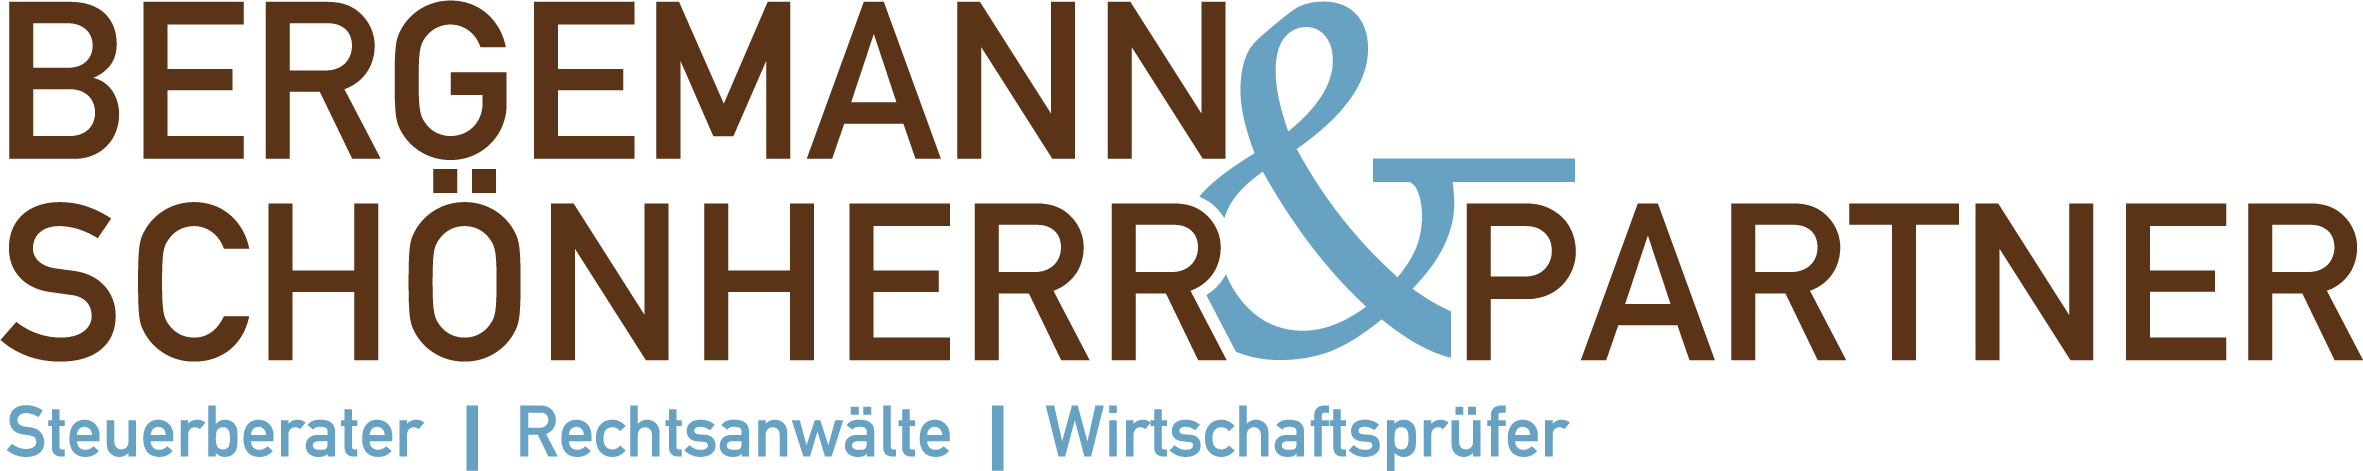 Bergemann partner logo